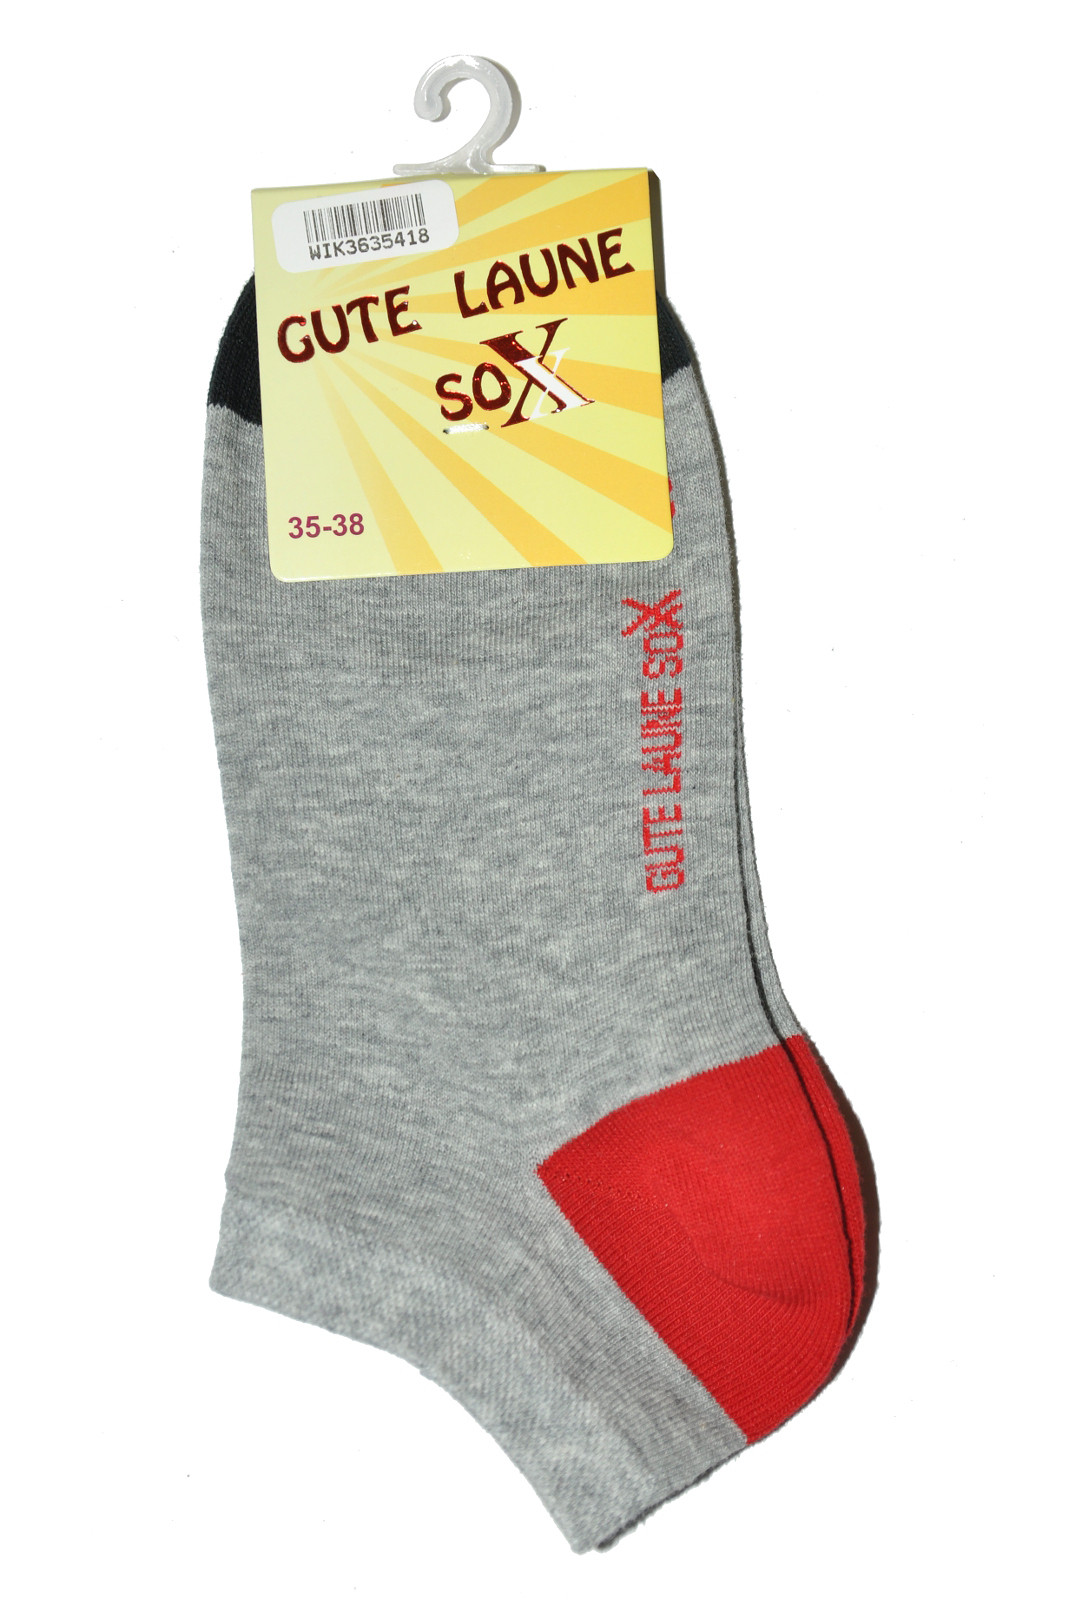 Dámské ponožky WiK 36354 Gute Laune Sox Bílá 35-38